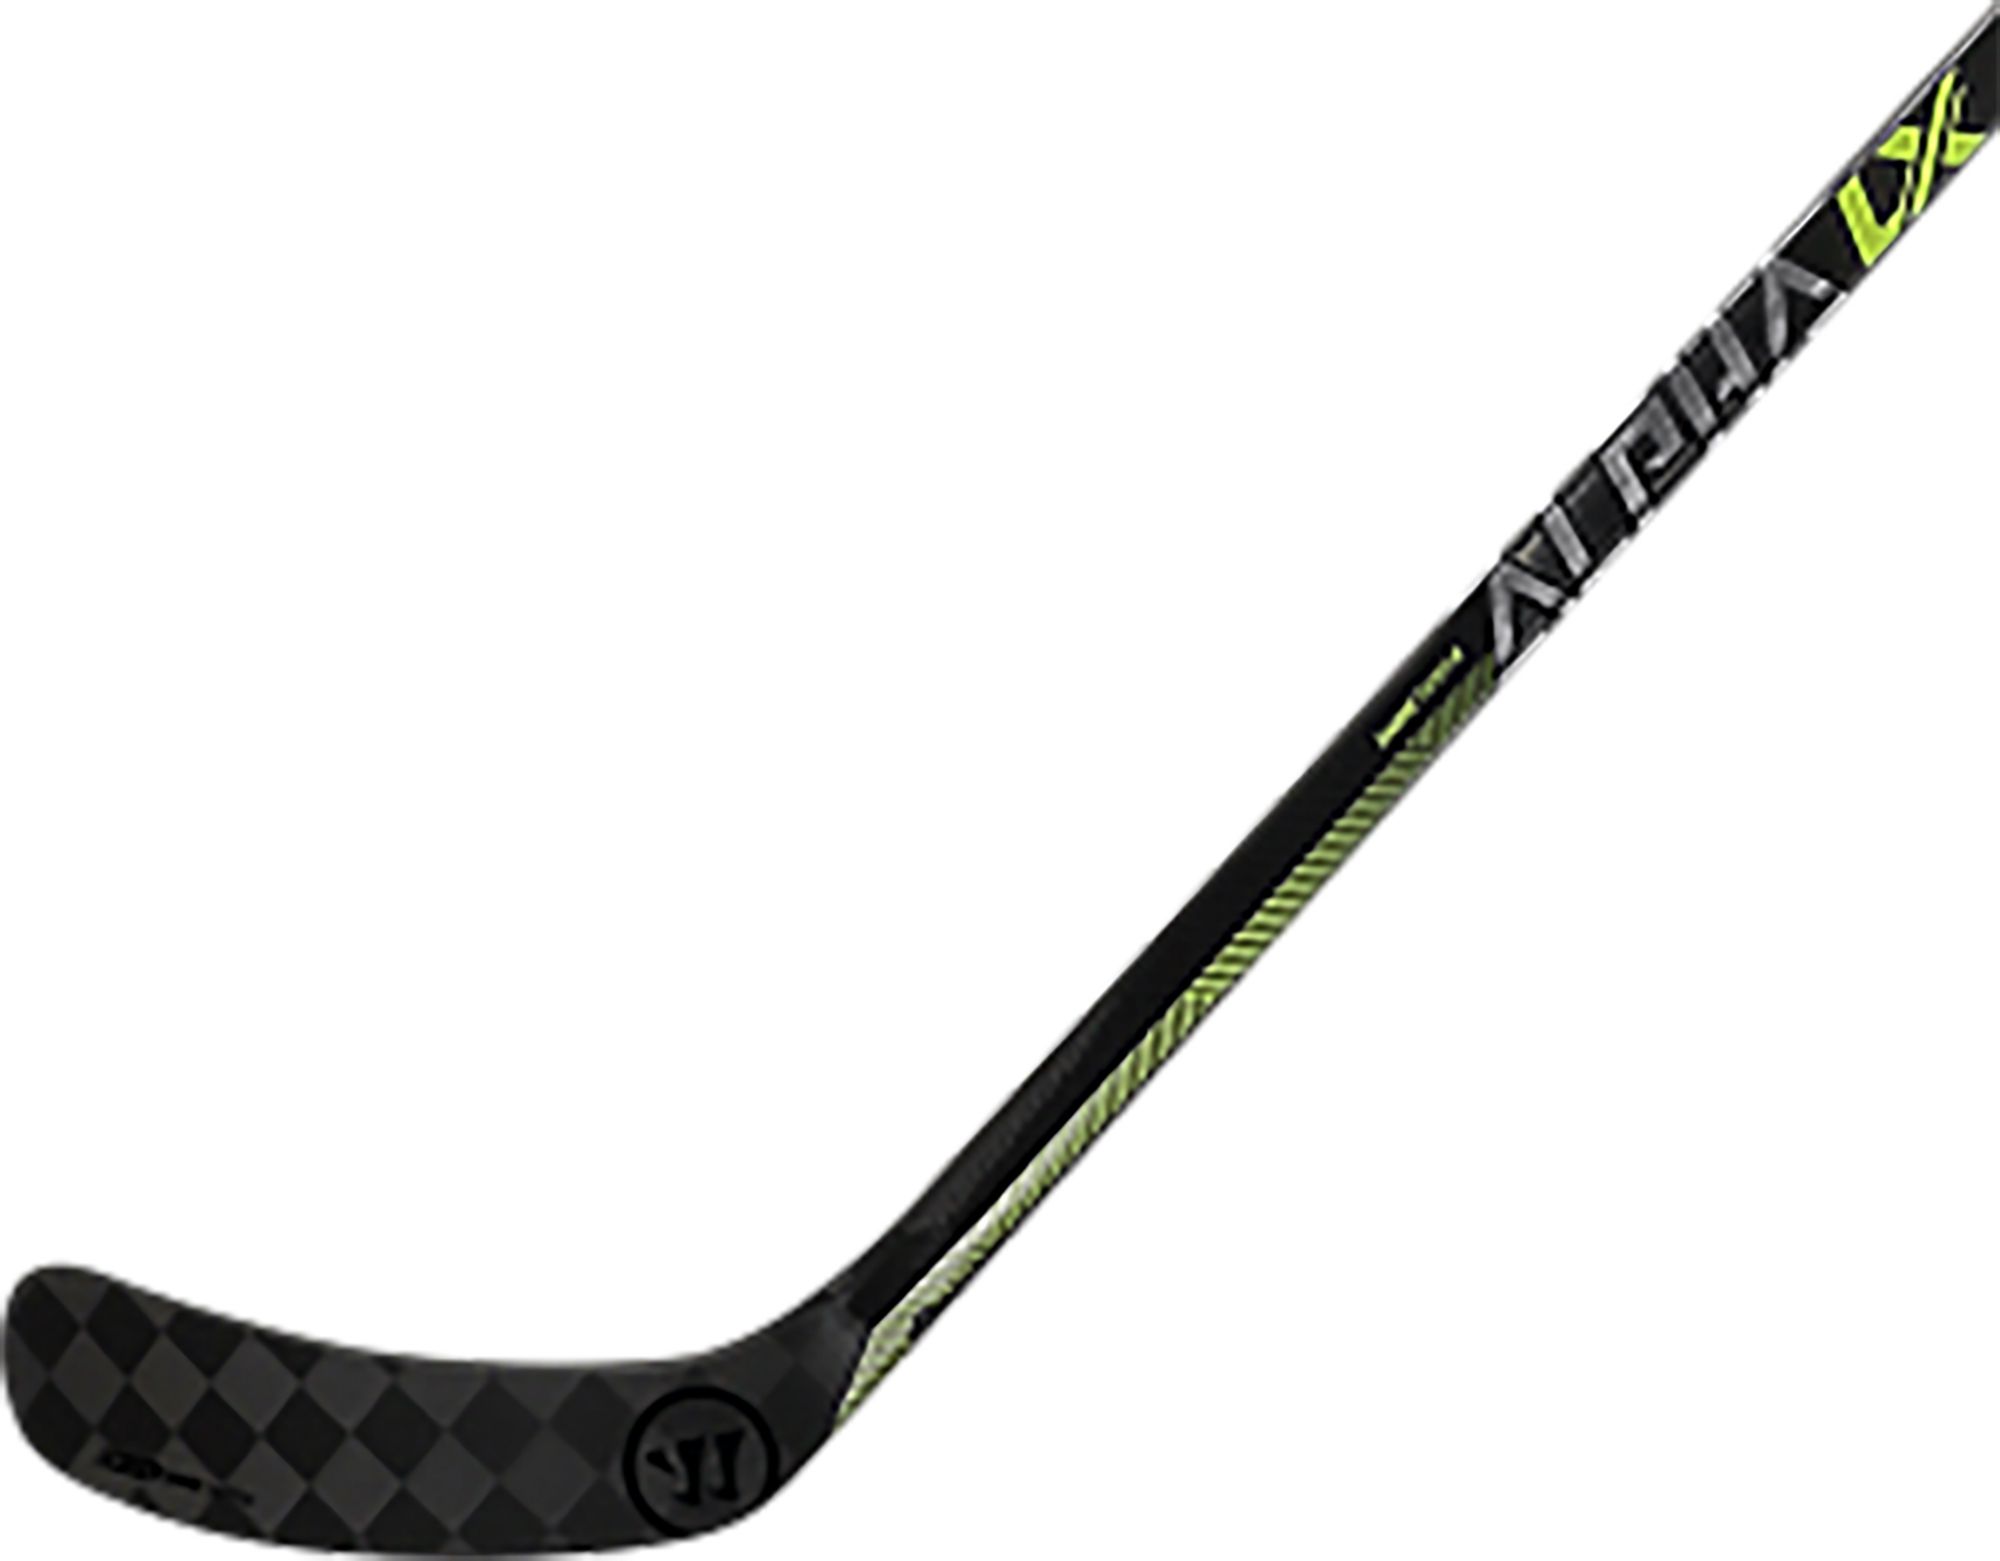 Warrior LX Pro Ice Hockey Stick - Senior